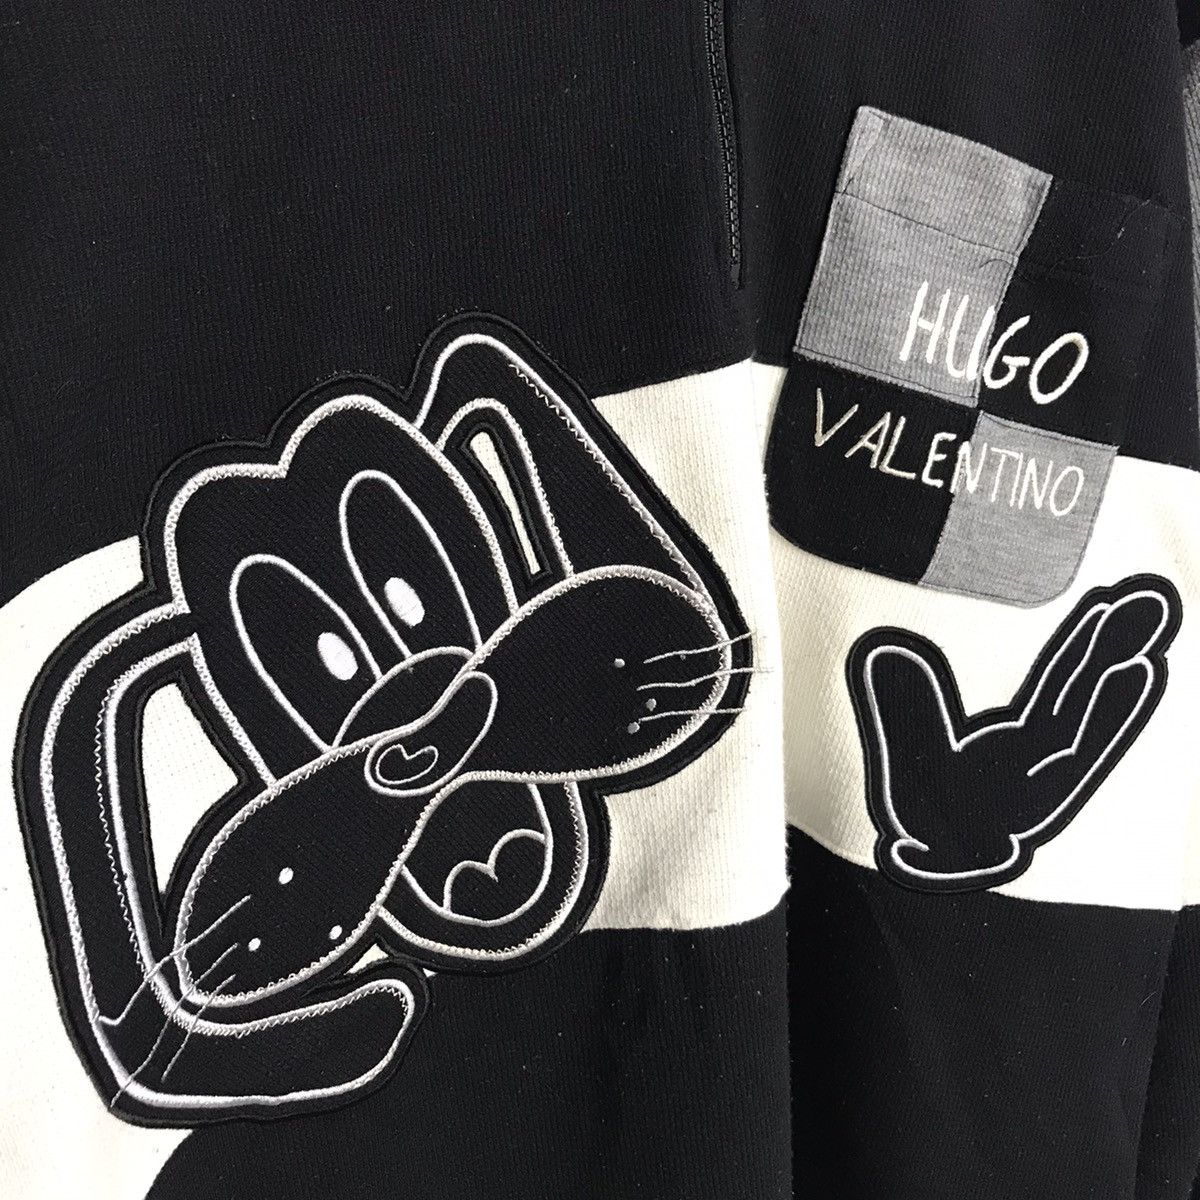 Hugo valentino vicenza italy big embroidery sweater - 3